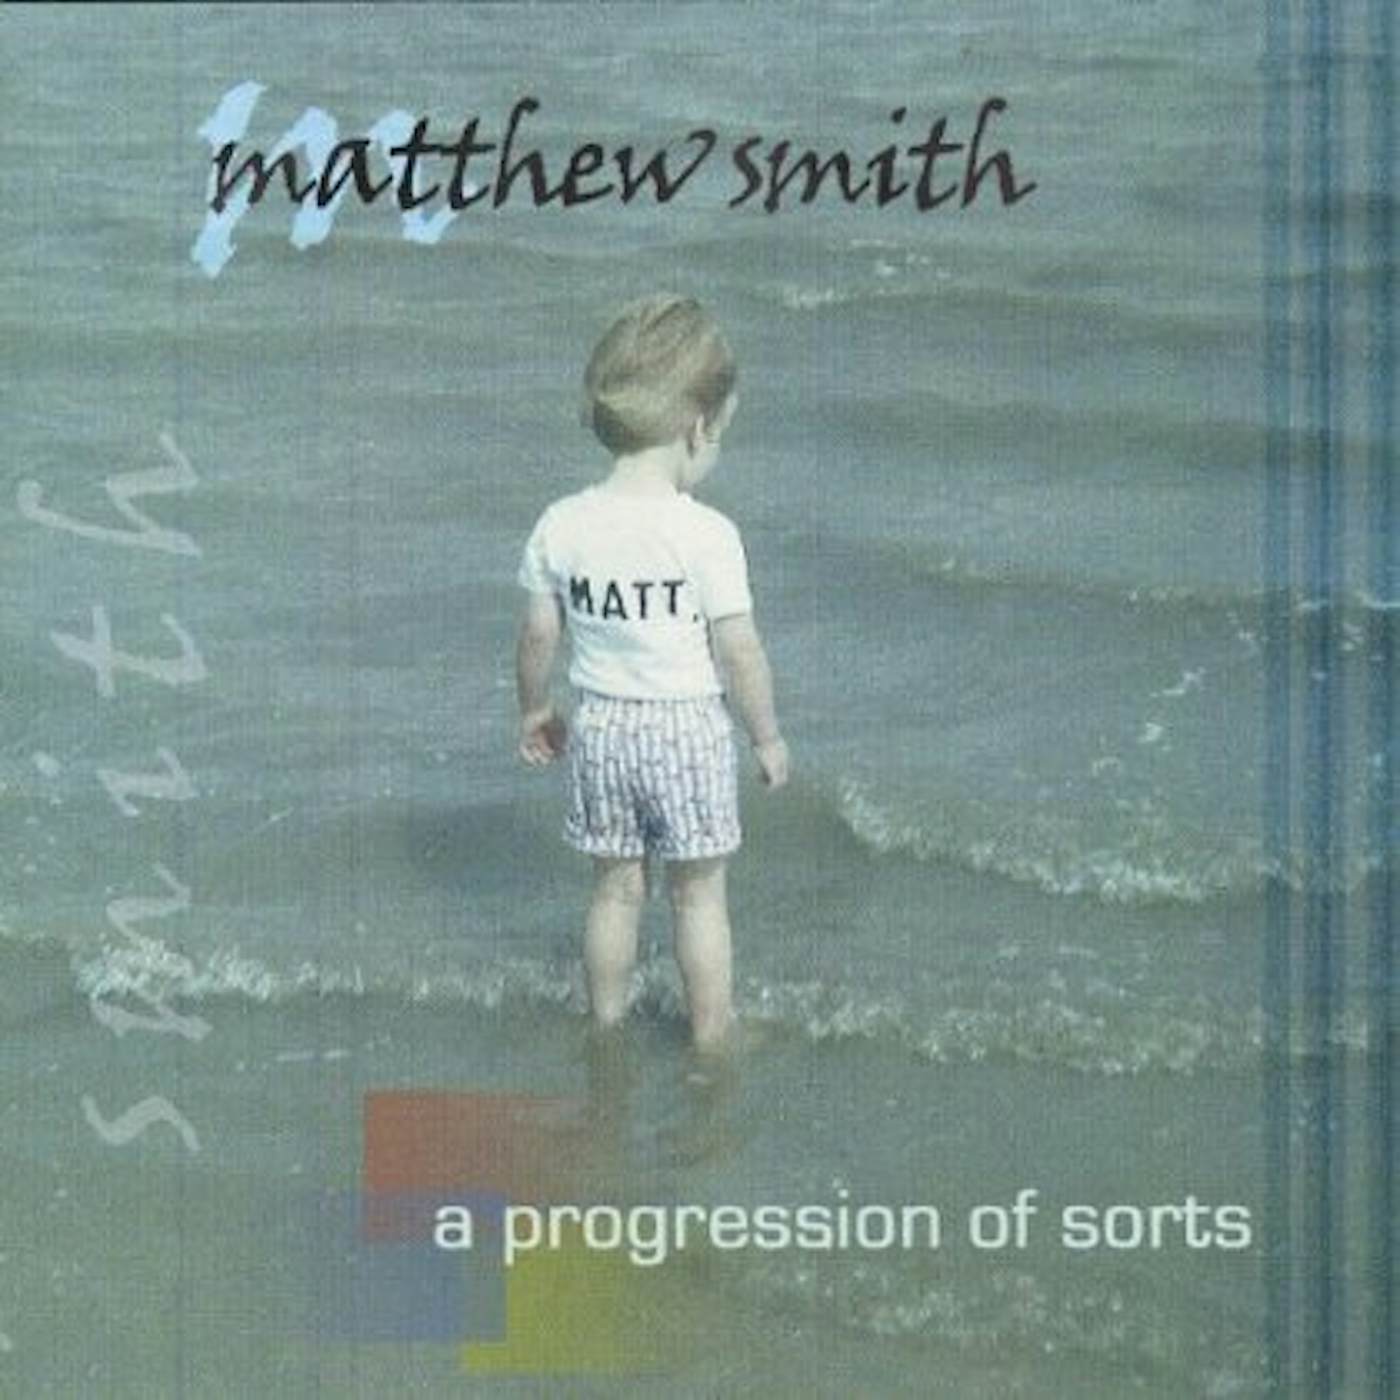 Matthew Smith PROGRESSION OF SORTS CD